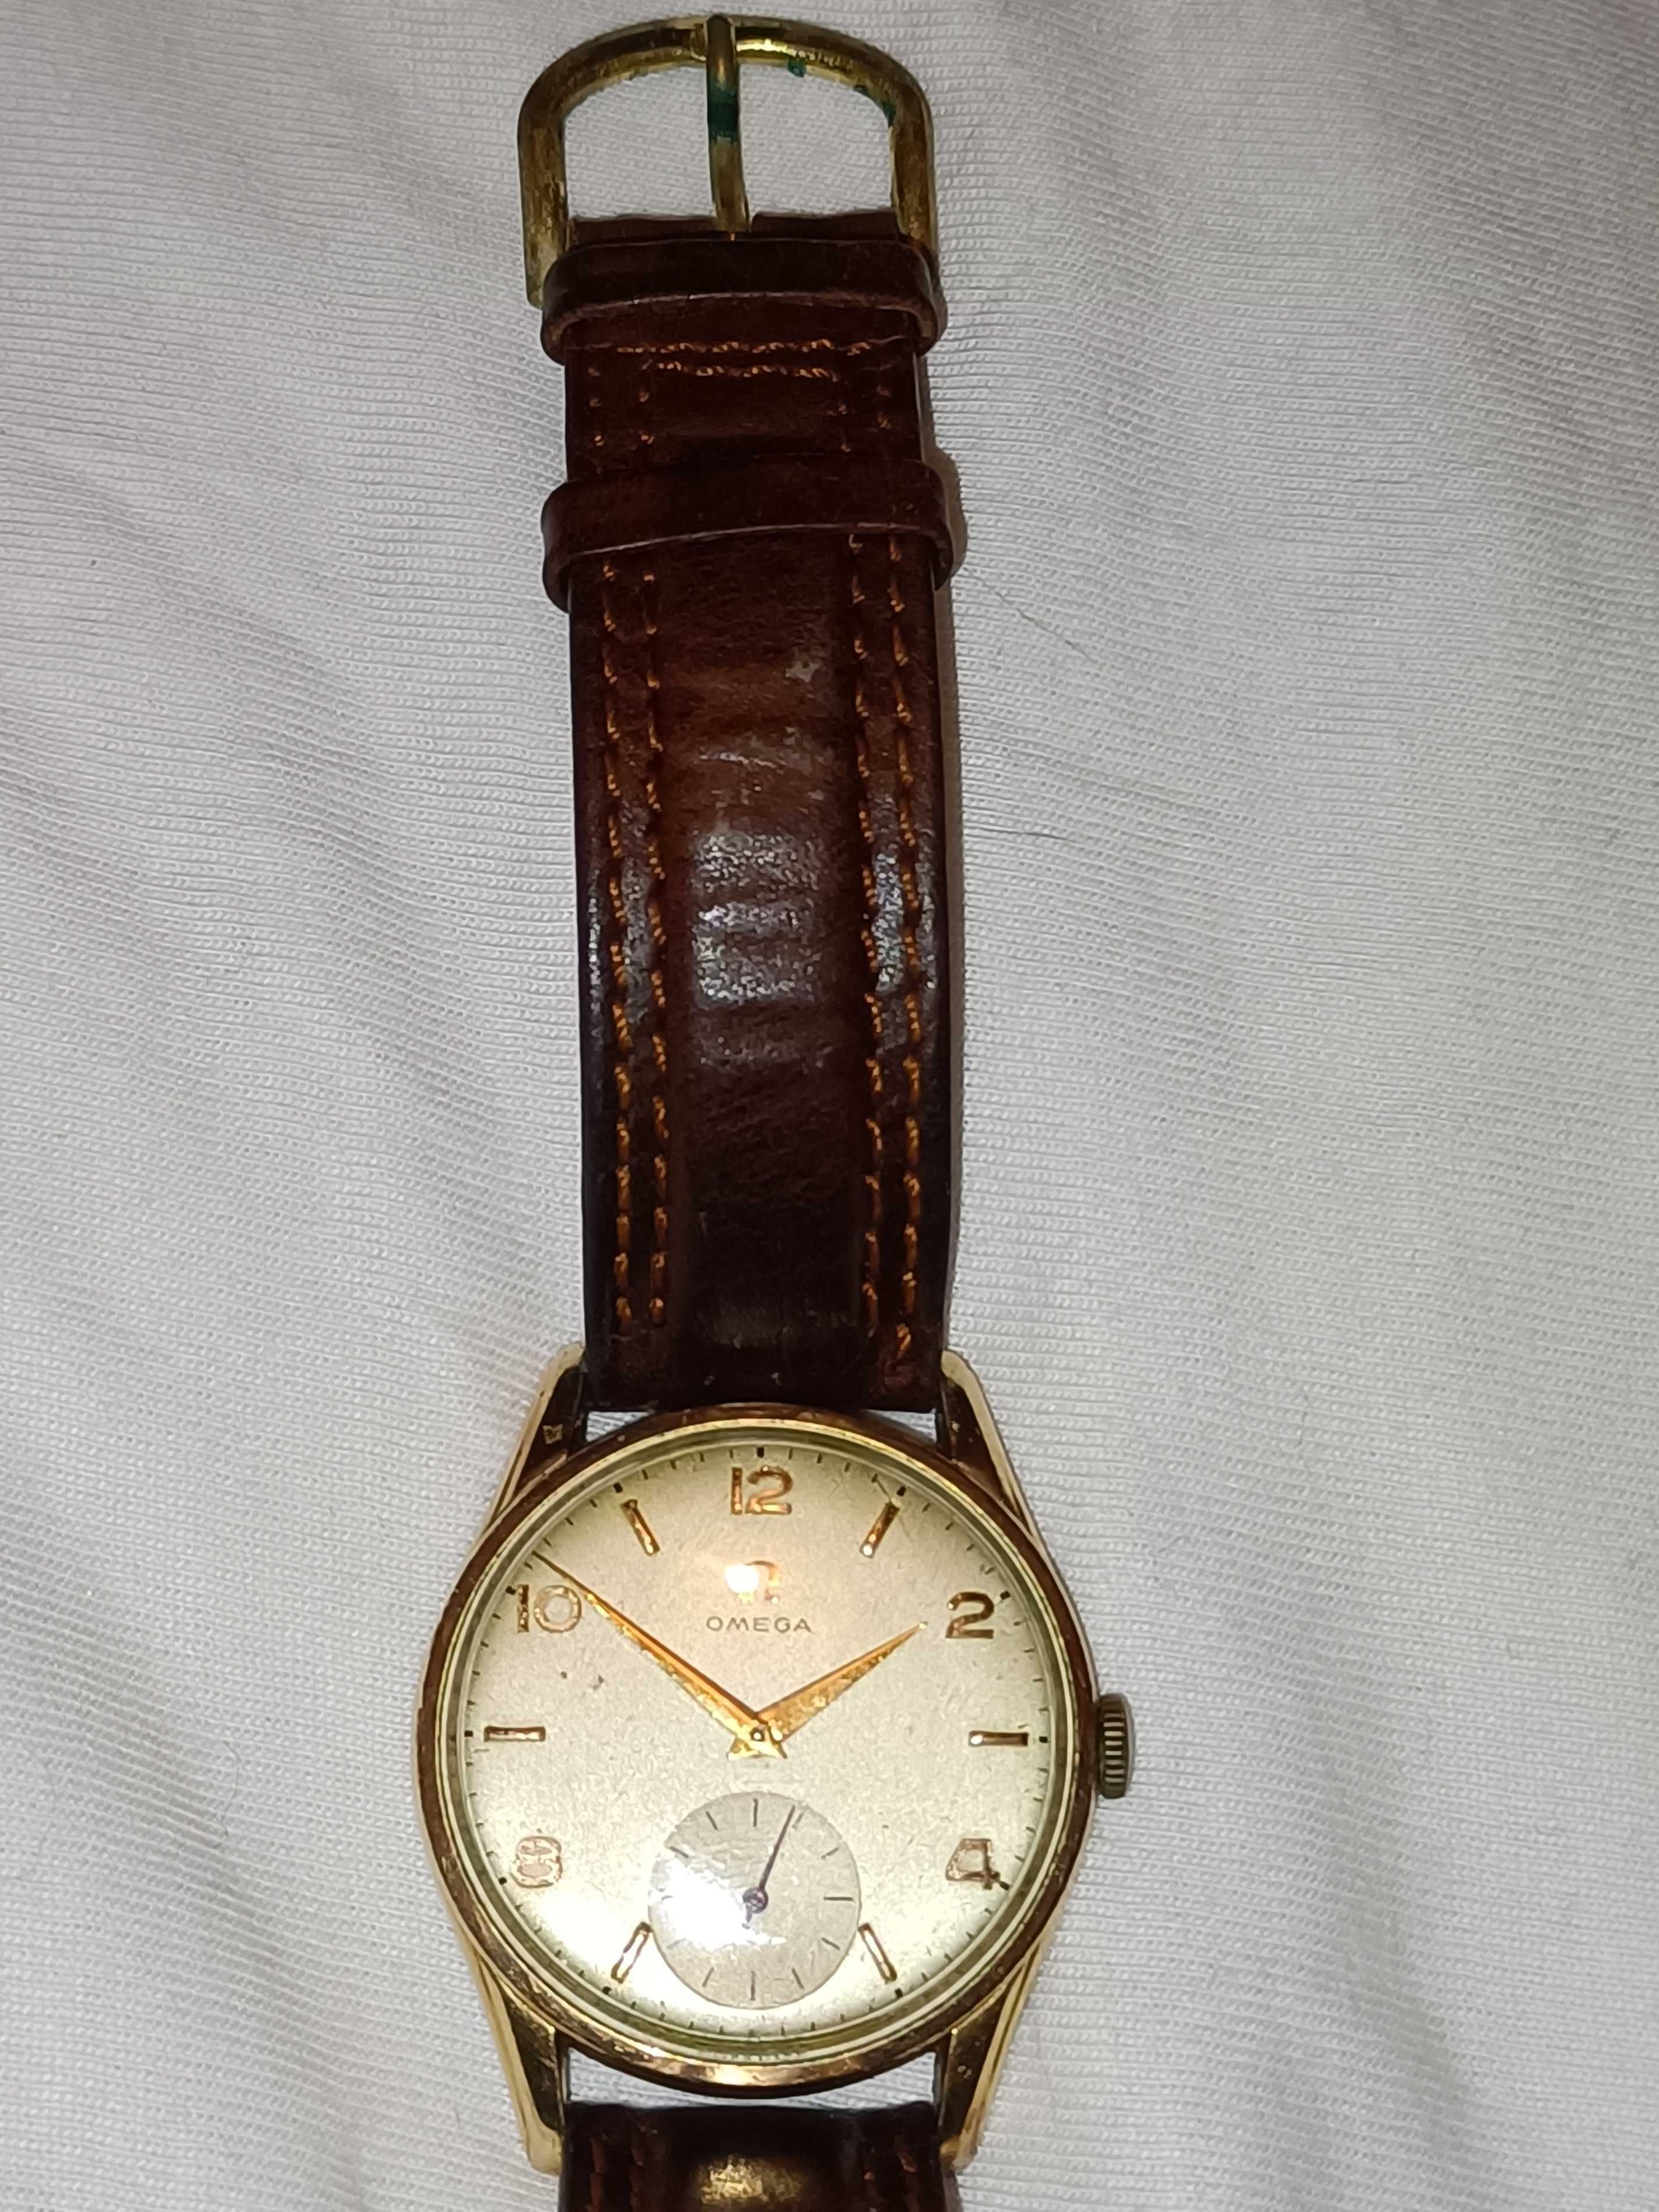 Relógio Omega dos anos 50 banhado a ouro